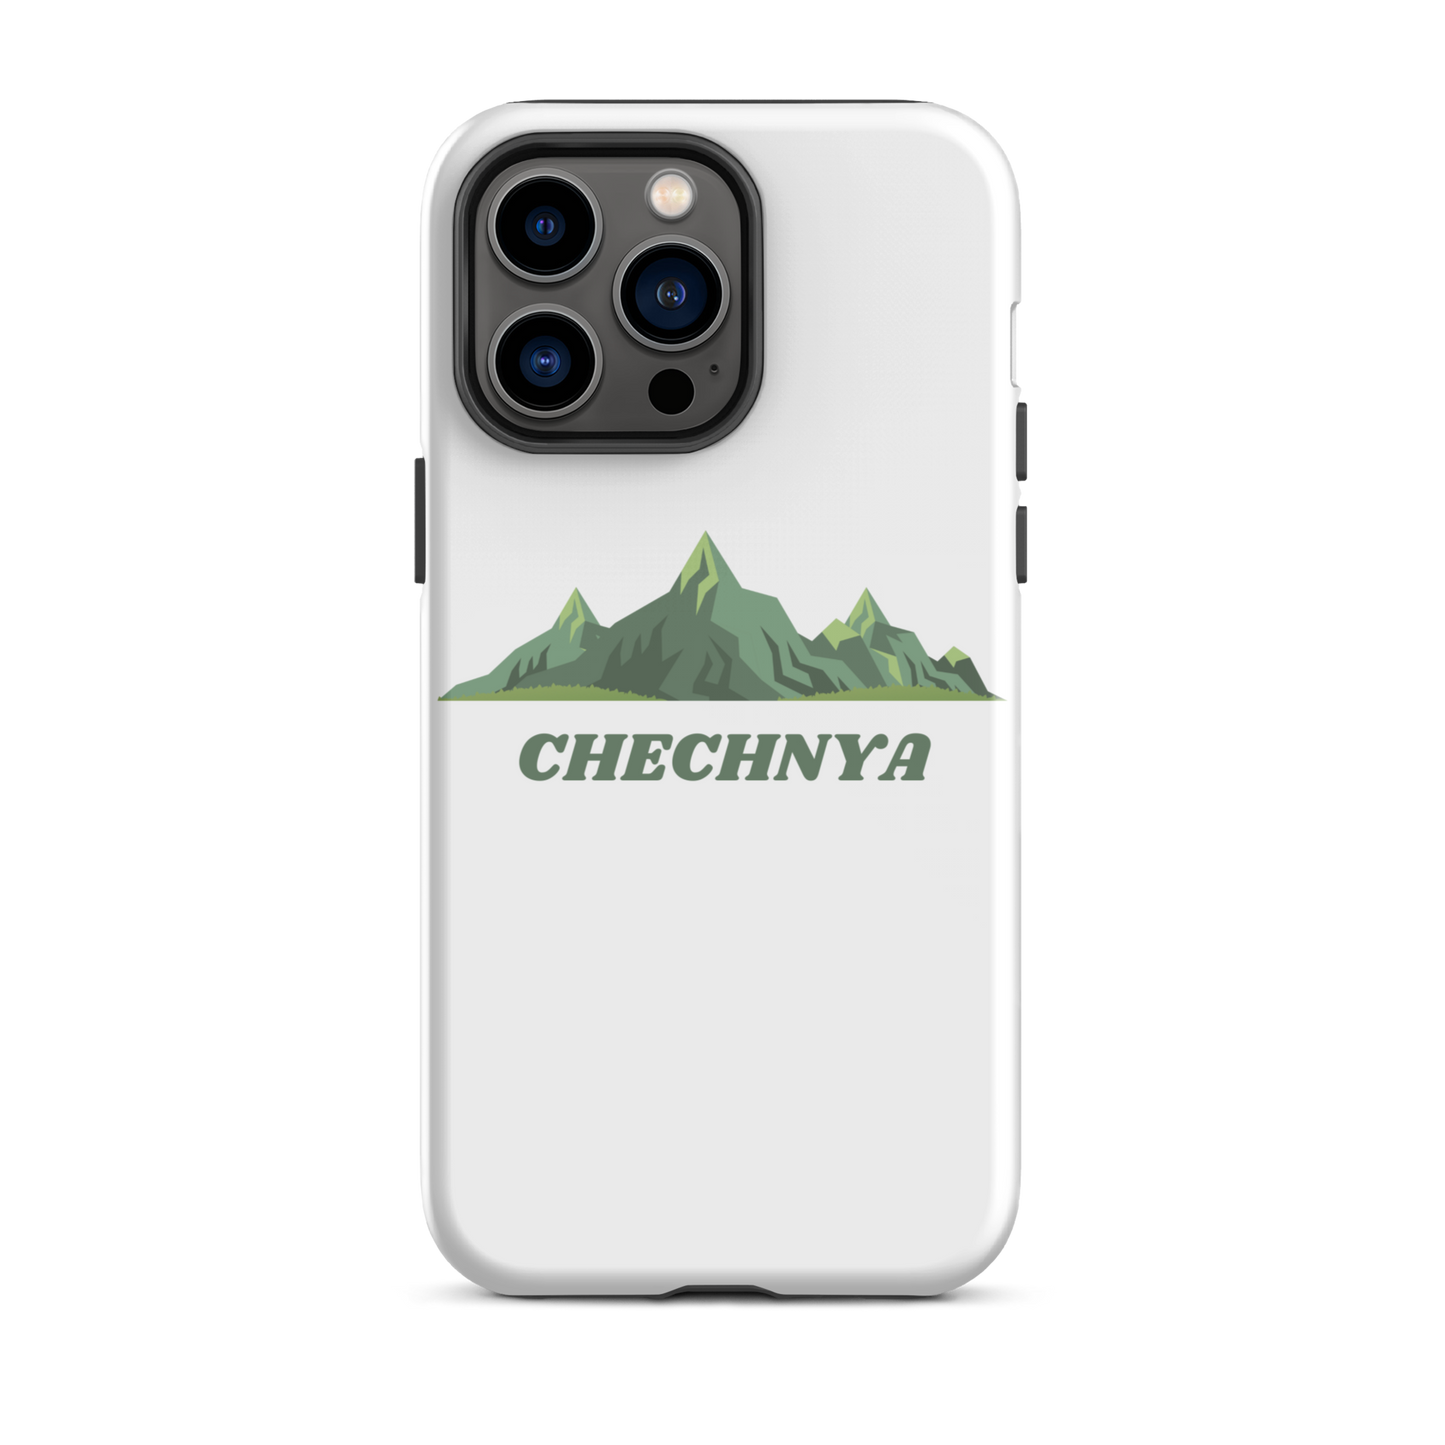 CHECHNYA - White